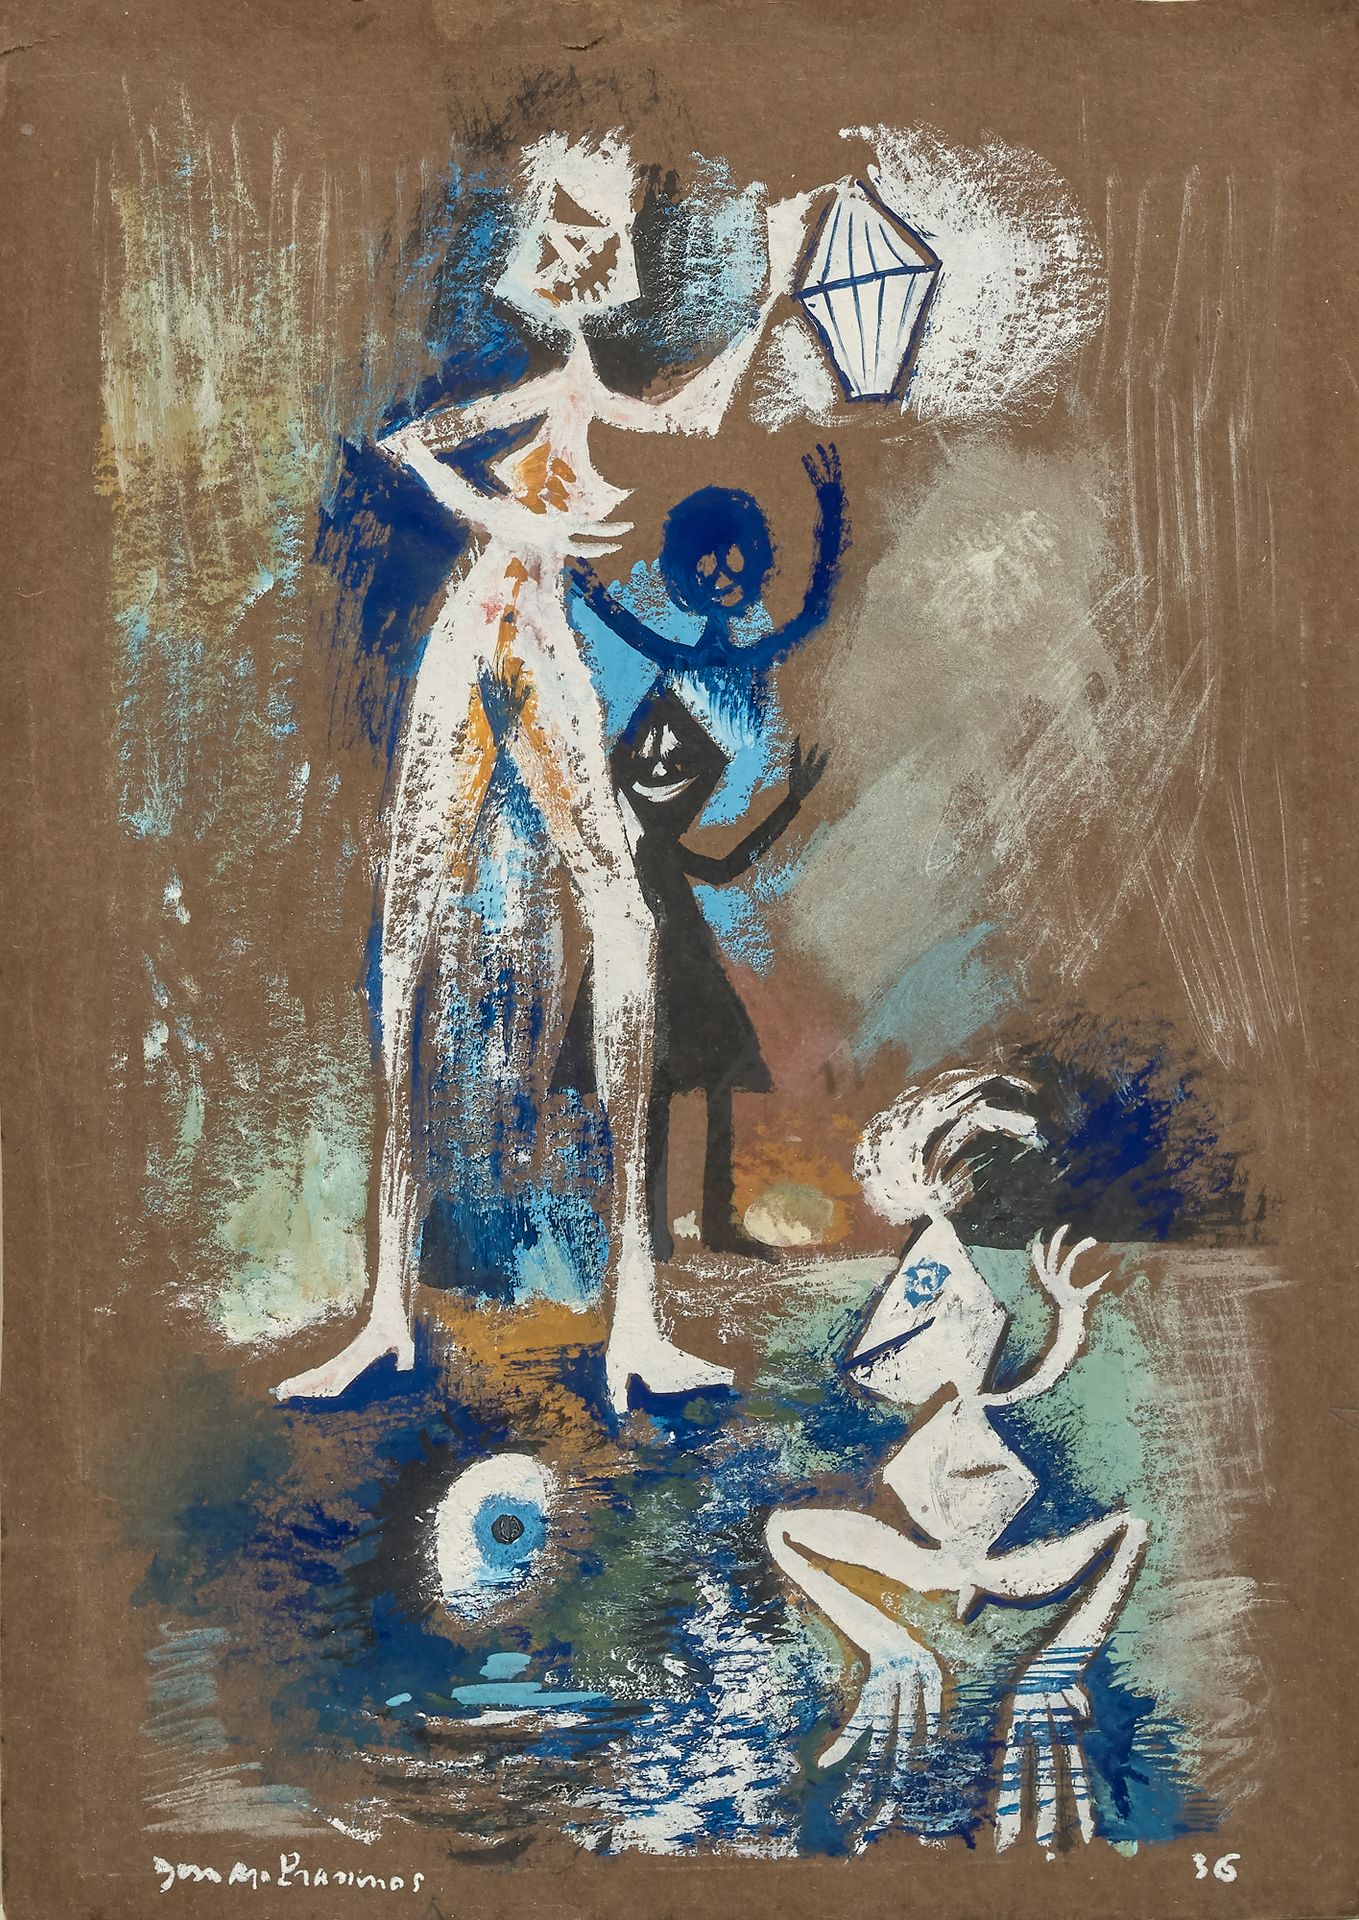 Mario PRASSINOS (1916-1985) 


无题》，1936年



纸上水粉画和粉彩画，左下角有签名，右下角有日期36



36 x 25&hellip;